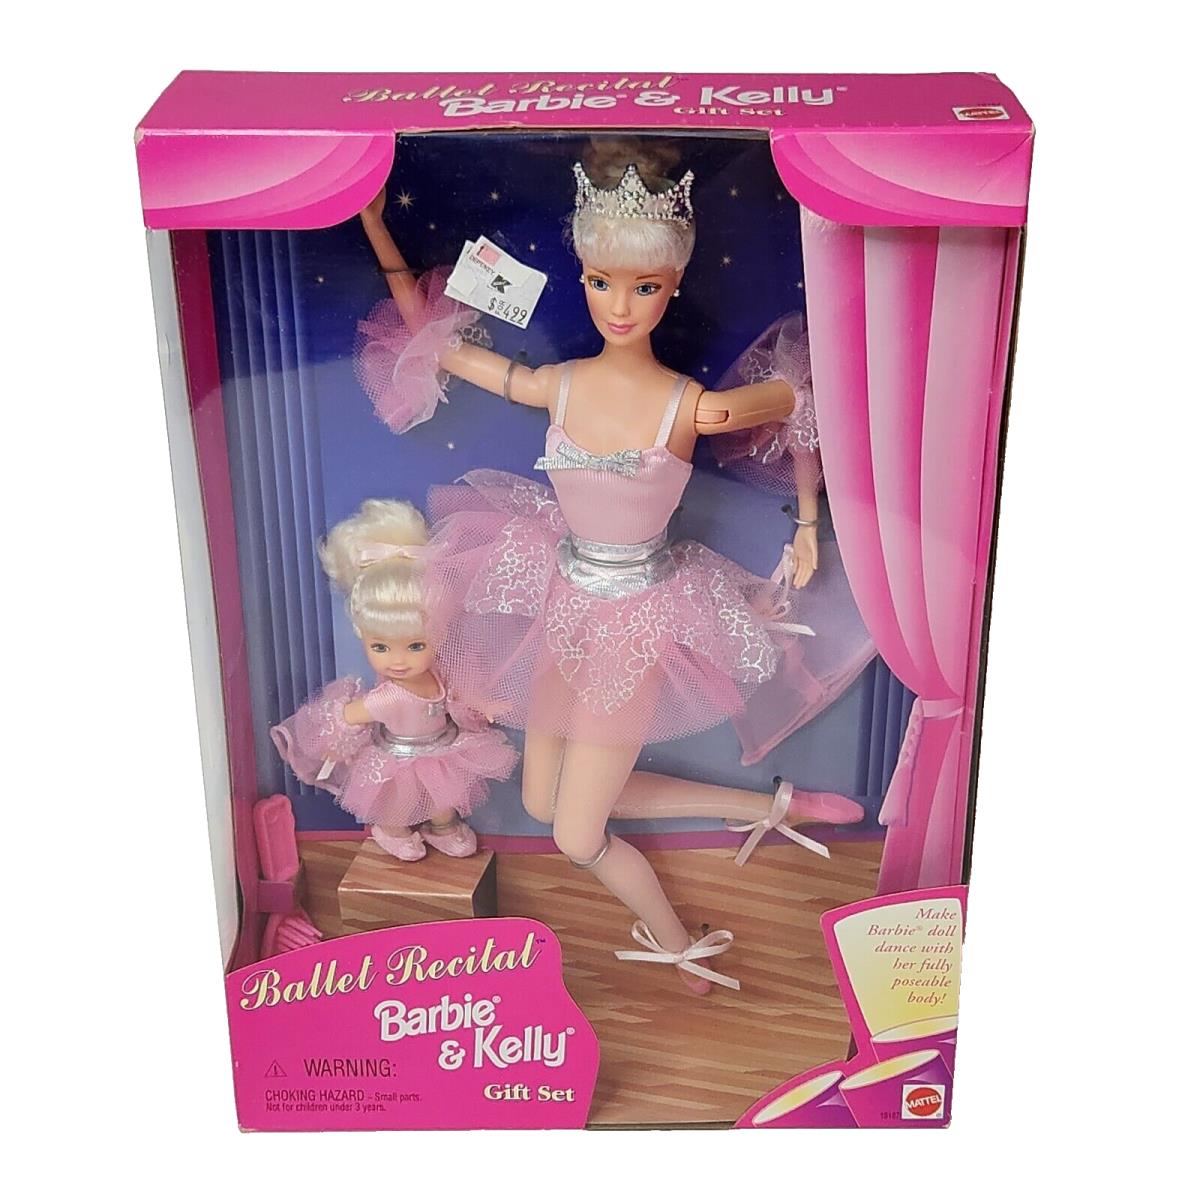 Vintage 1997 Ballet Recital Barbie + Kelly Dolls Box 18187 Mattel